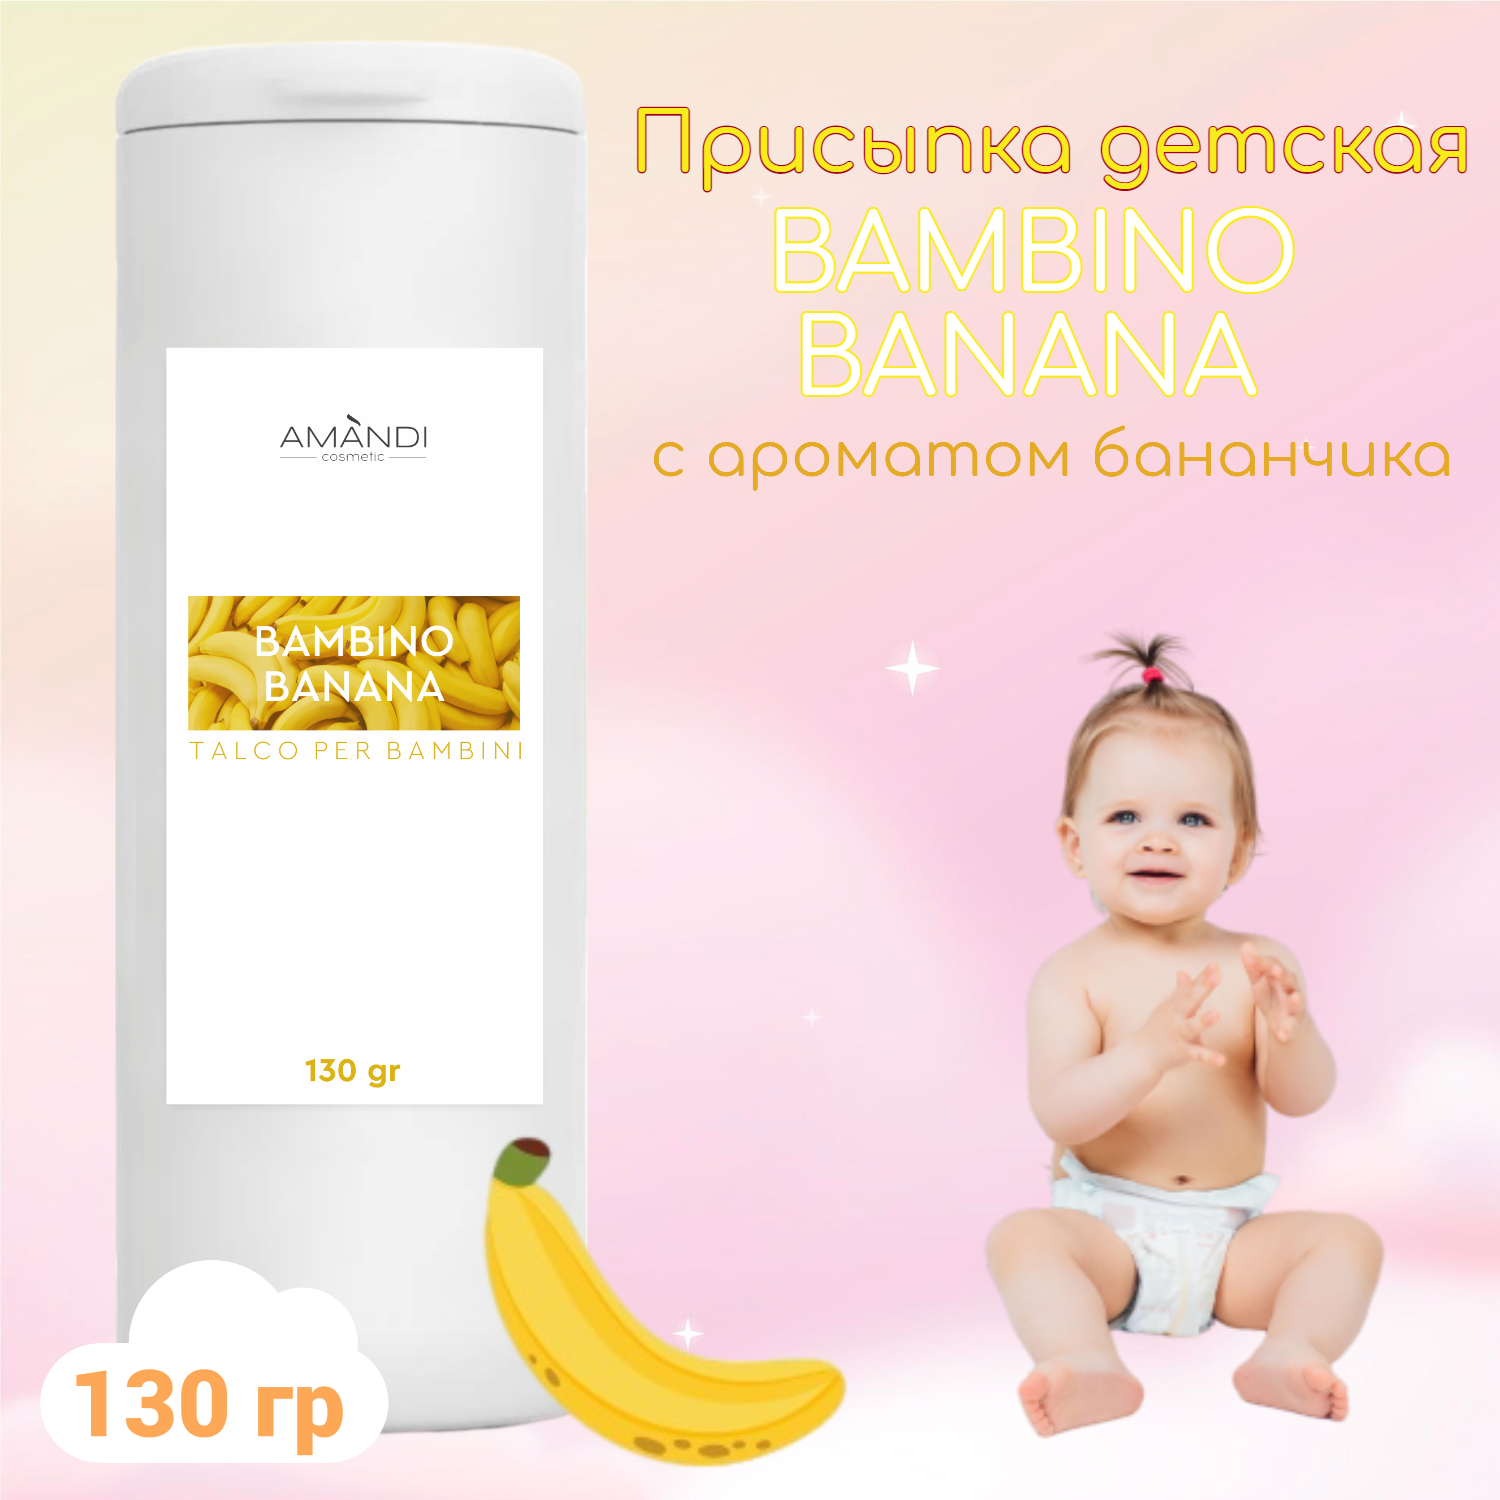 Присыпка детская AMANDI BAMBINO BANANA с ароматом банана 130 грамм - фото 2